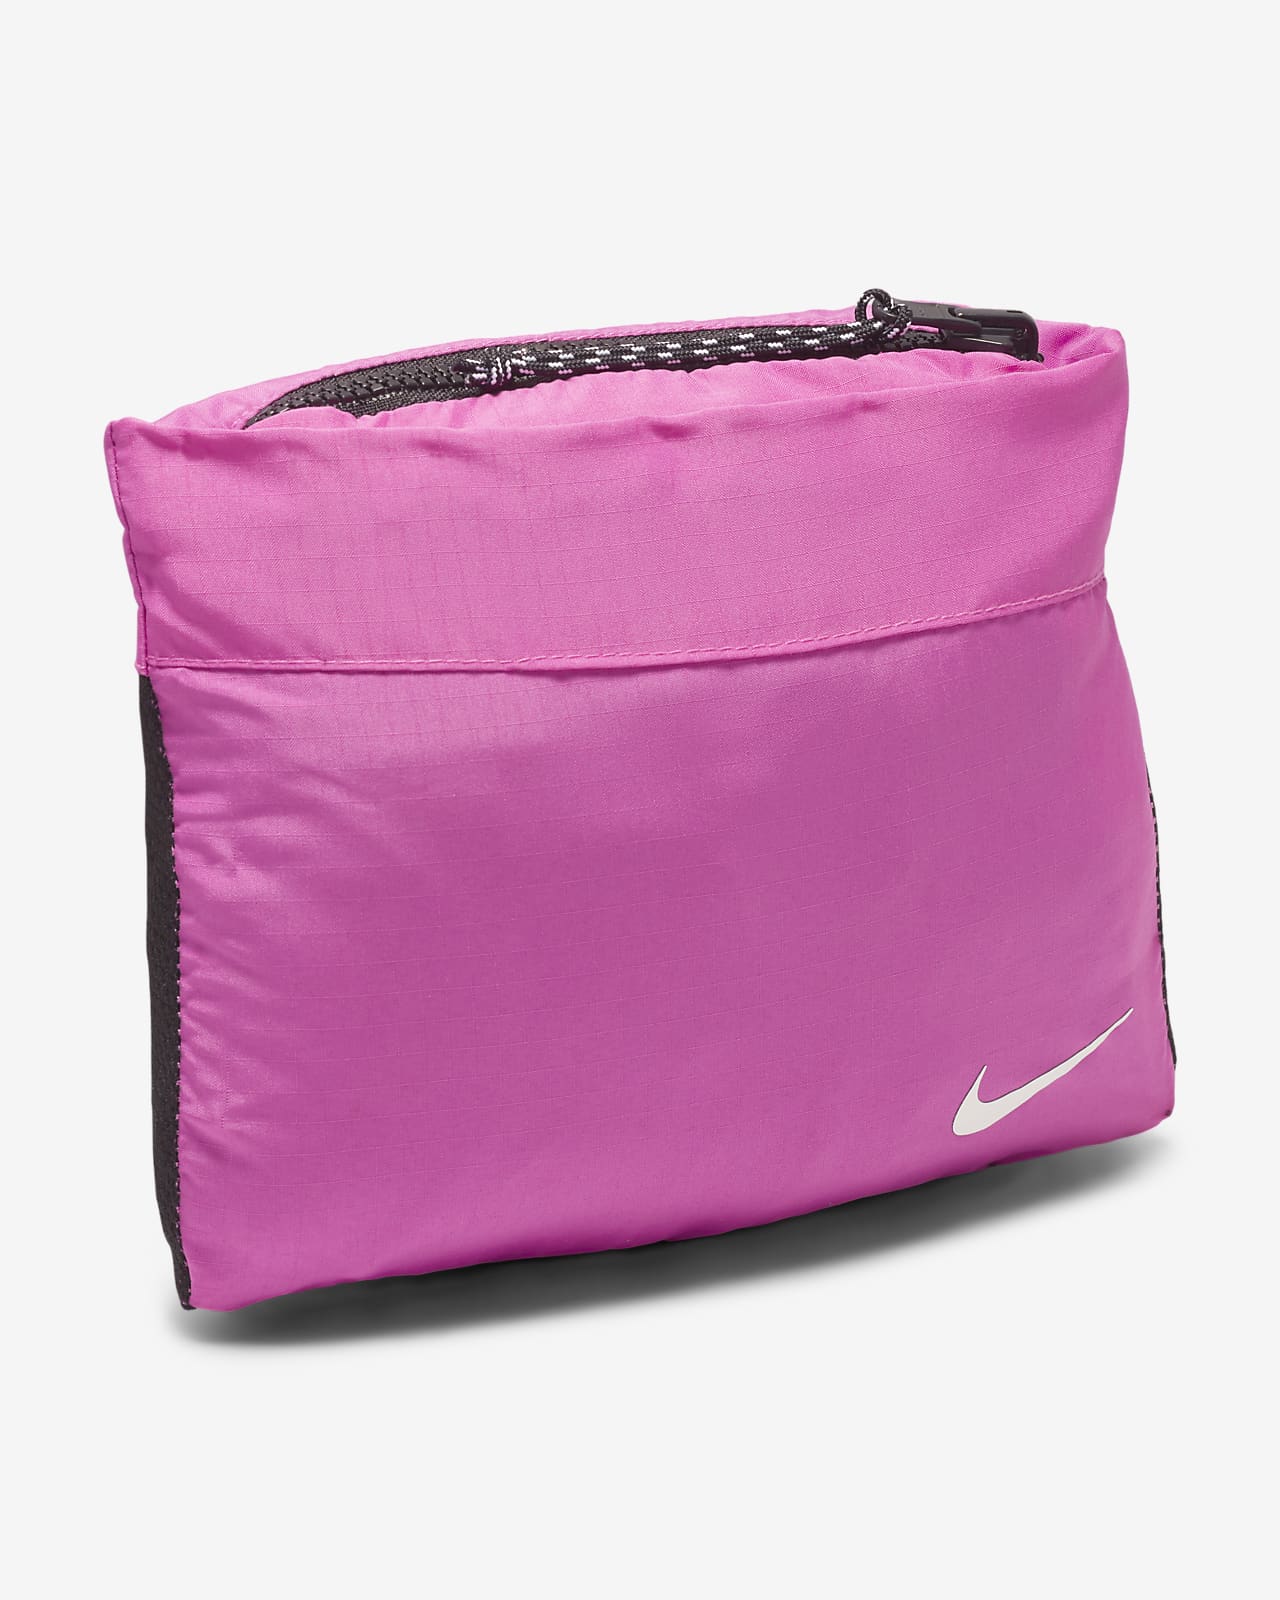 Amazon.com: Nike Shoe Box Bag (12L) (Black/Black/University Red, 732 CU IN)  : Clothing, Shoes & Jewelry